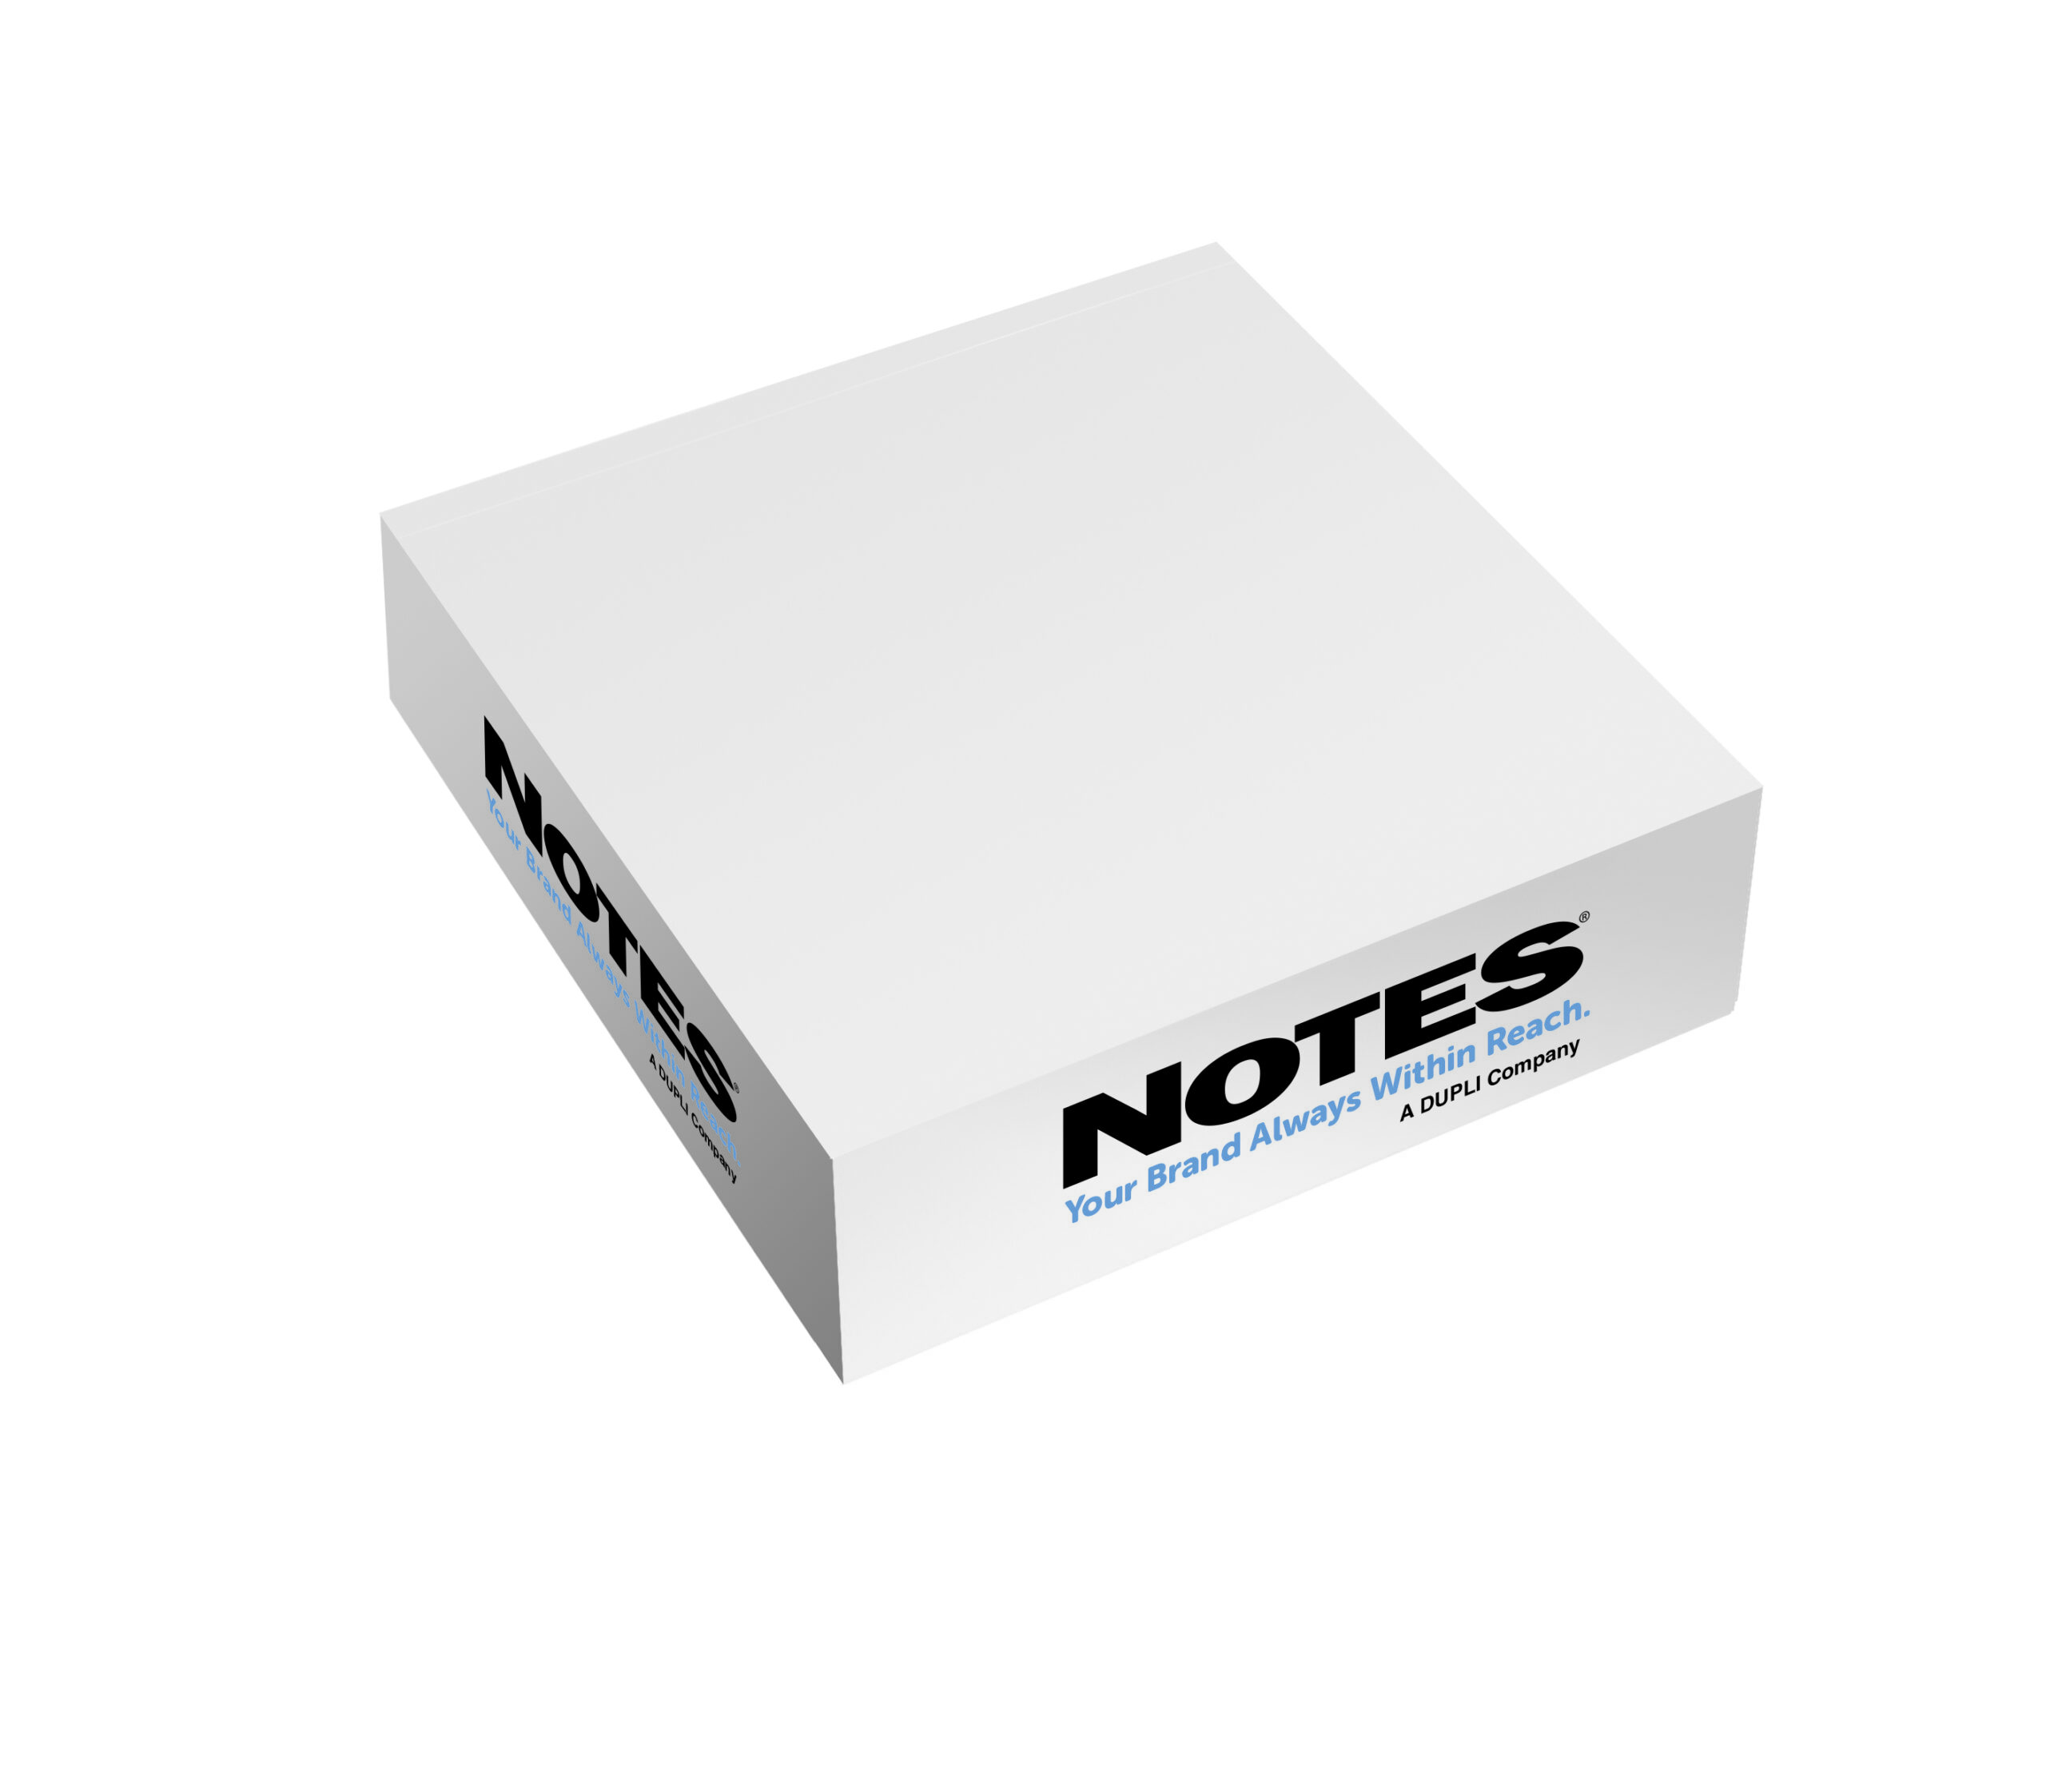 non-adhesive note cube half-size